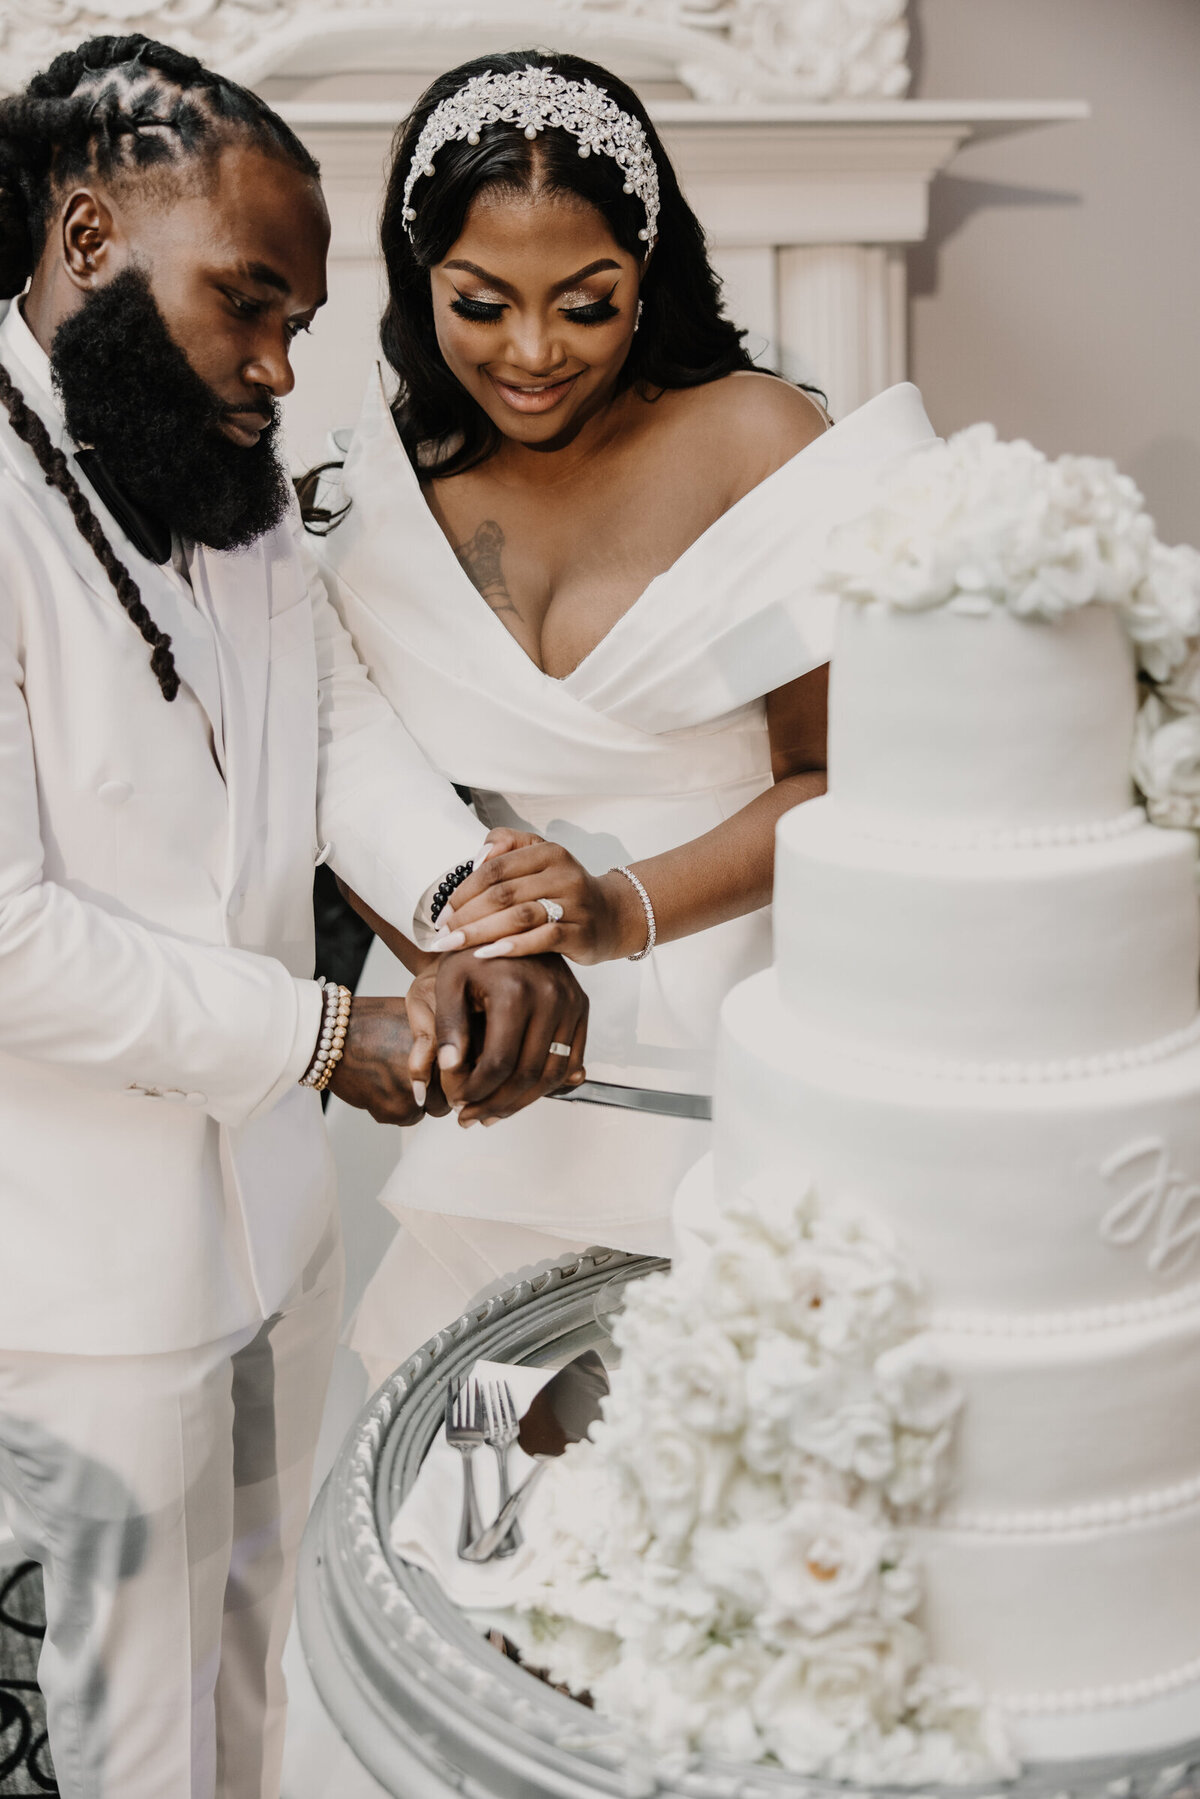 bride-and-groom-cutting-the-luxury-wedding-cake